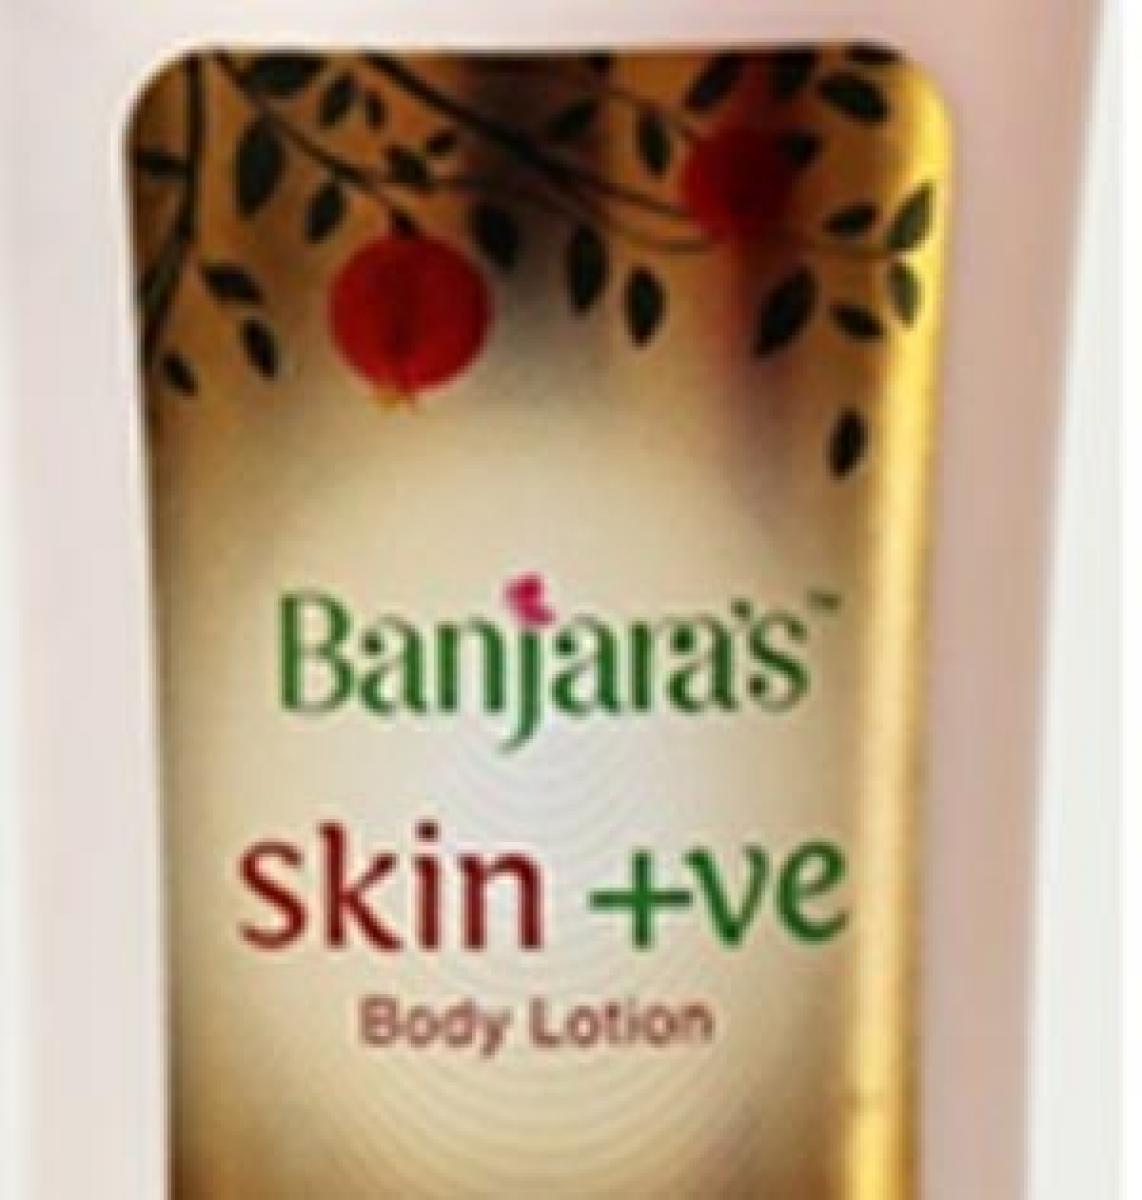 New range of Banjaras Skin +ve introduced